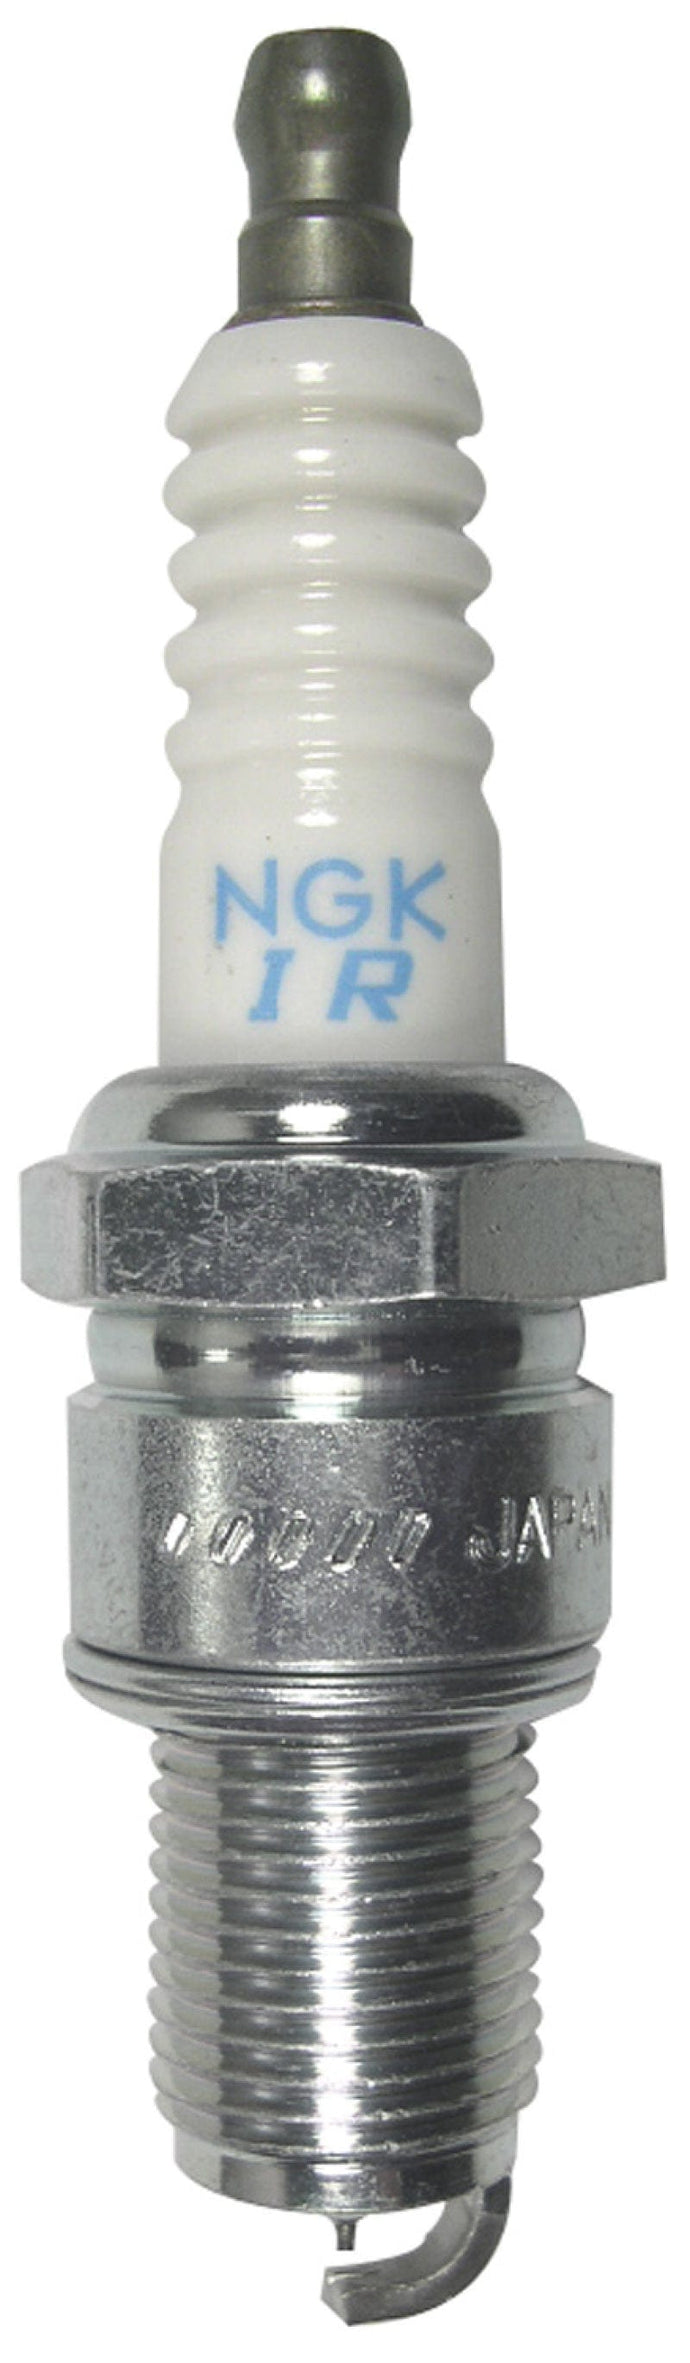 NGK NGK3106